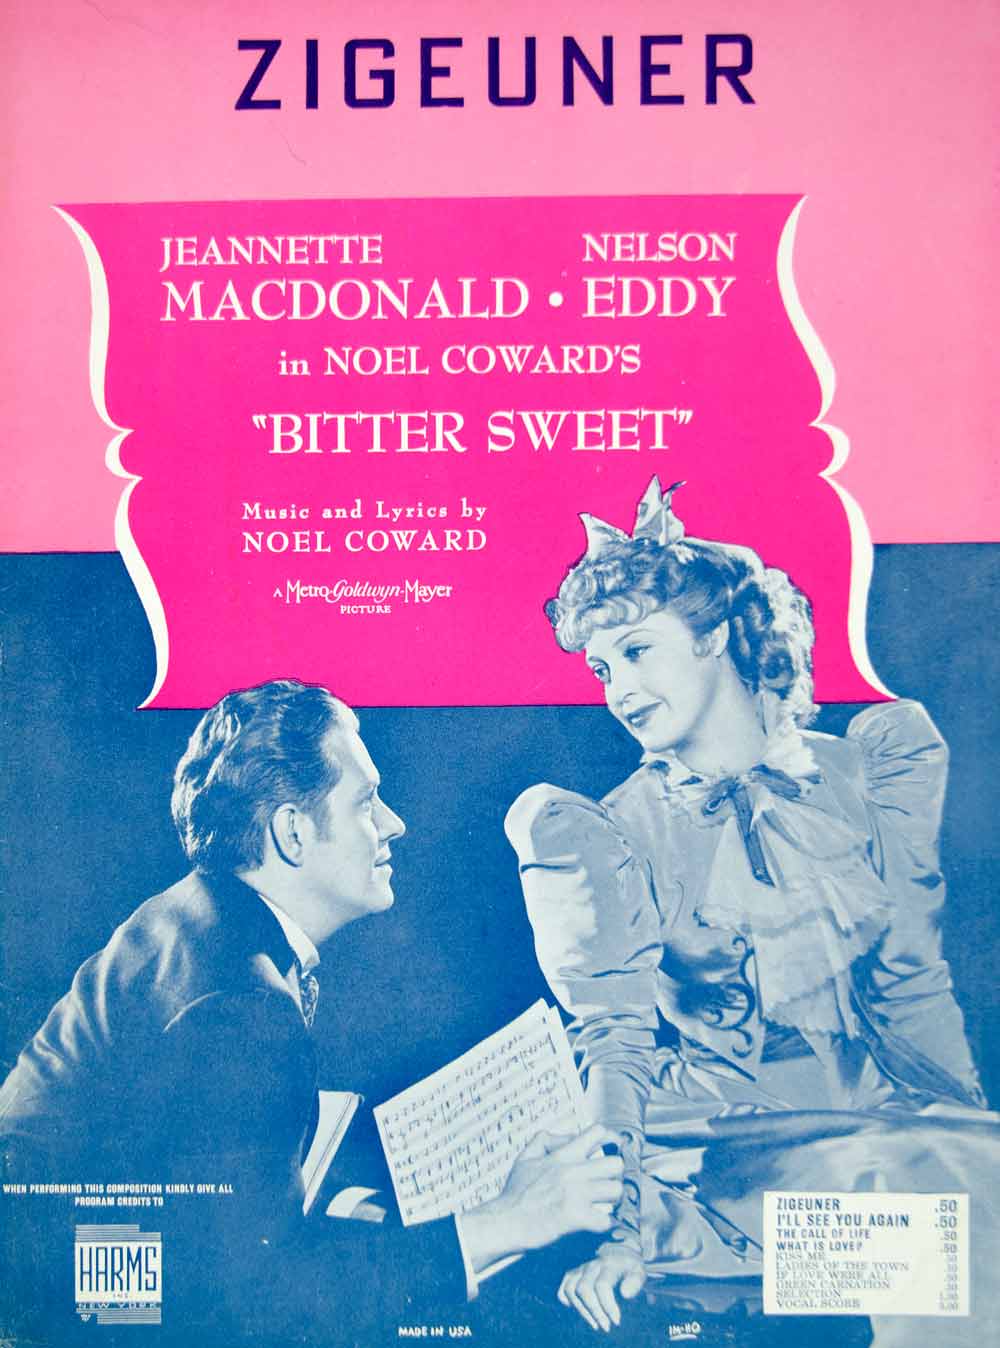 1929 Sheet Music Zigeuner Noel Coward Bitter Sweet 1940 Movie Nelson Eddy ZSM8